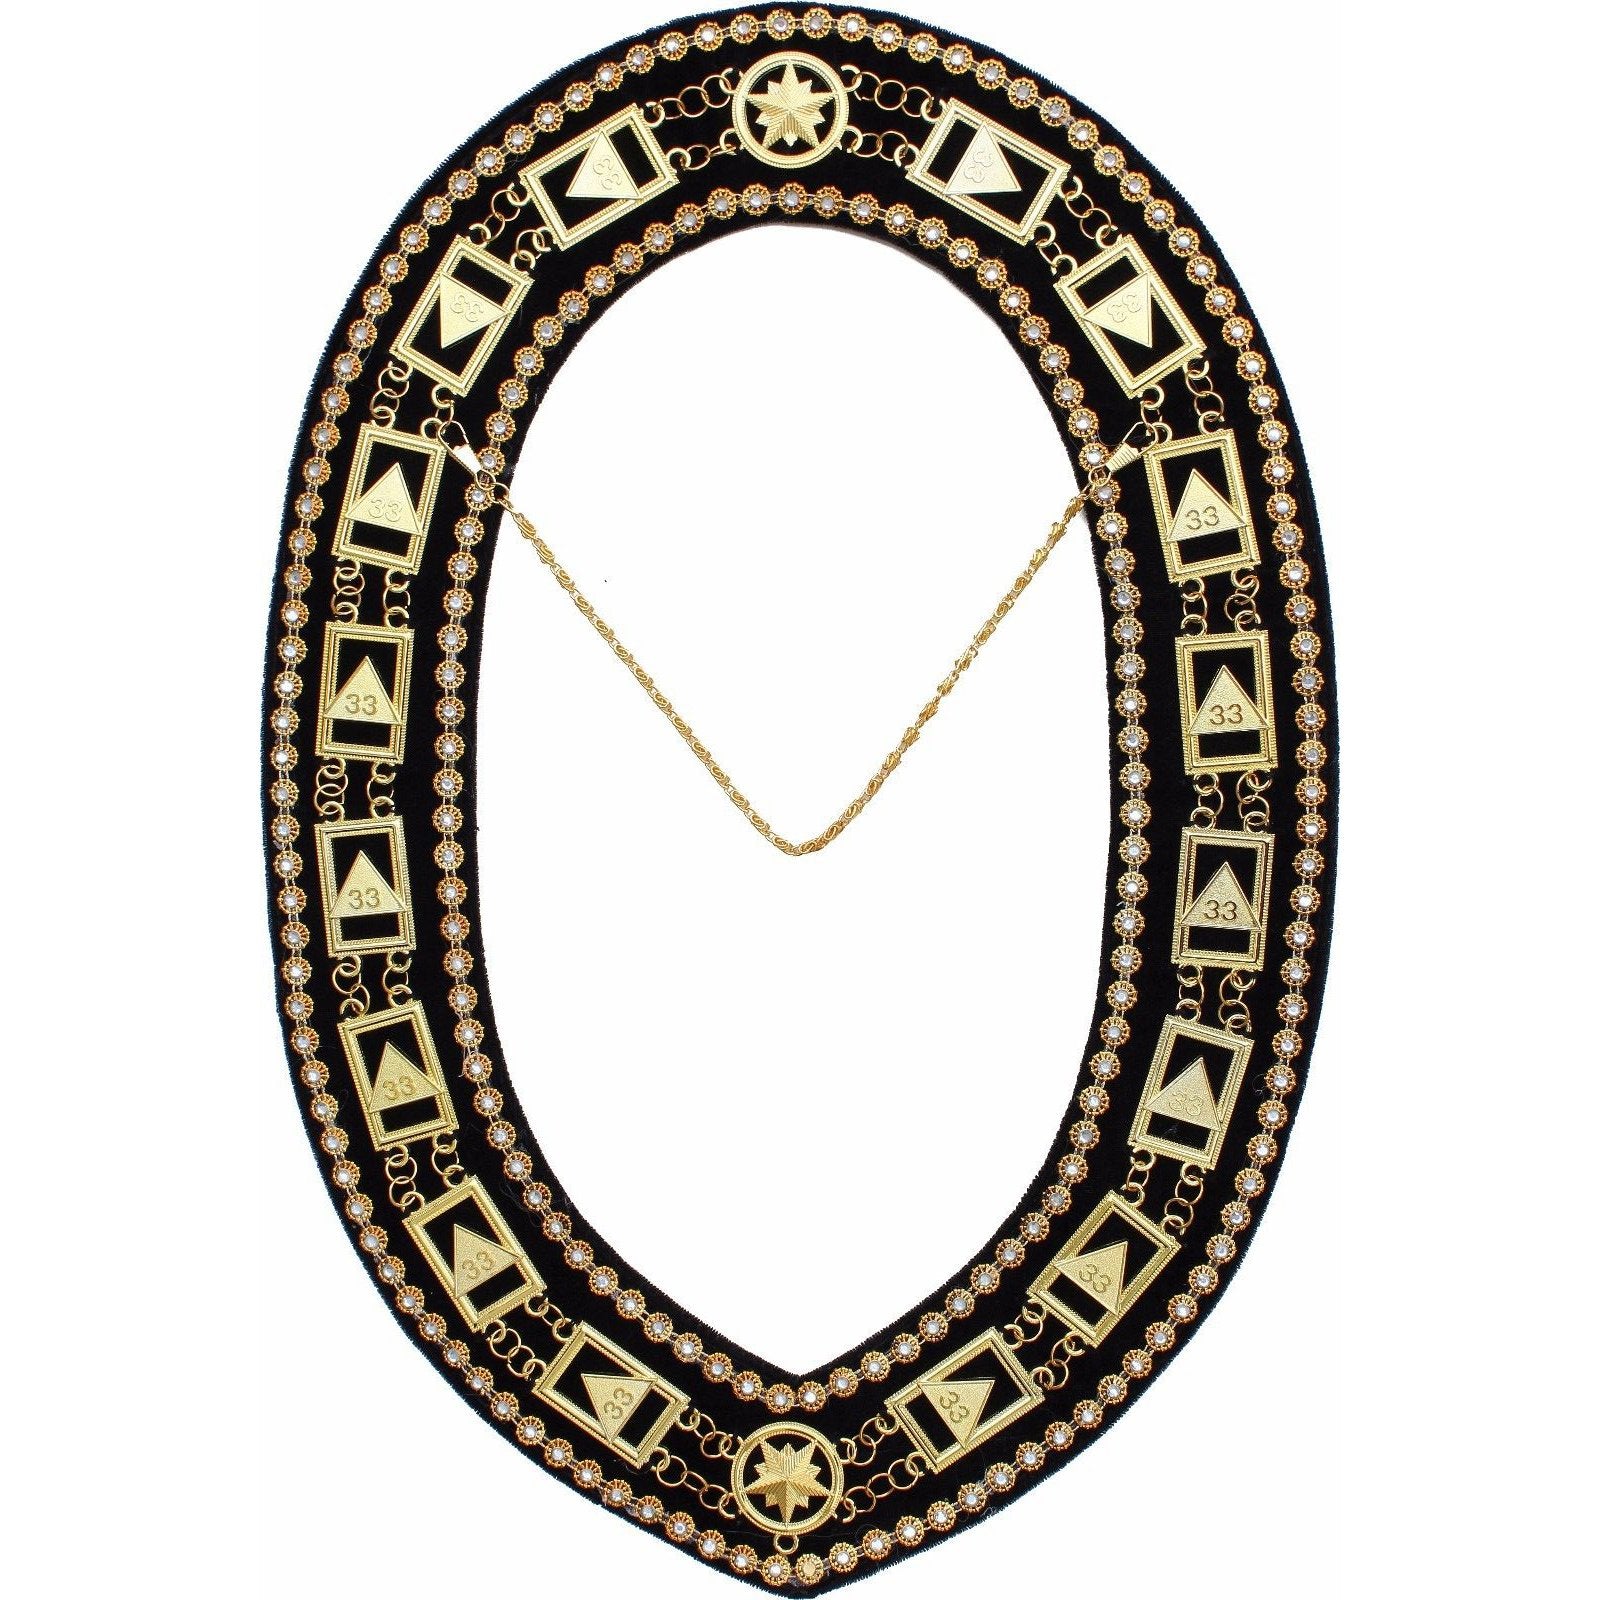 33rd Degree Scottish Rite Chain Collar - Gold Plated with Rhinestones - Bricks Masons